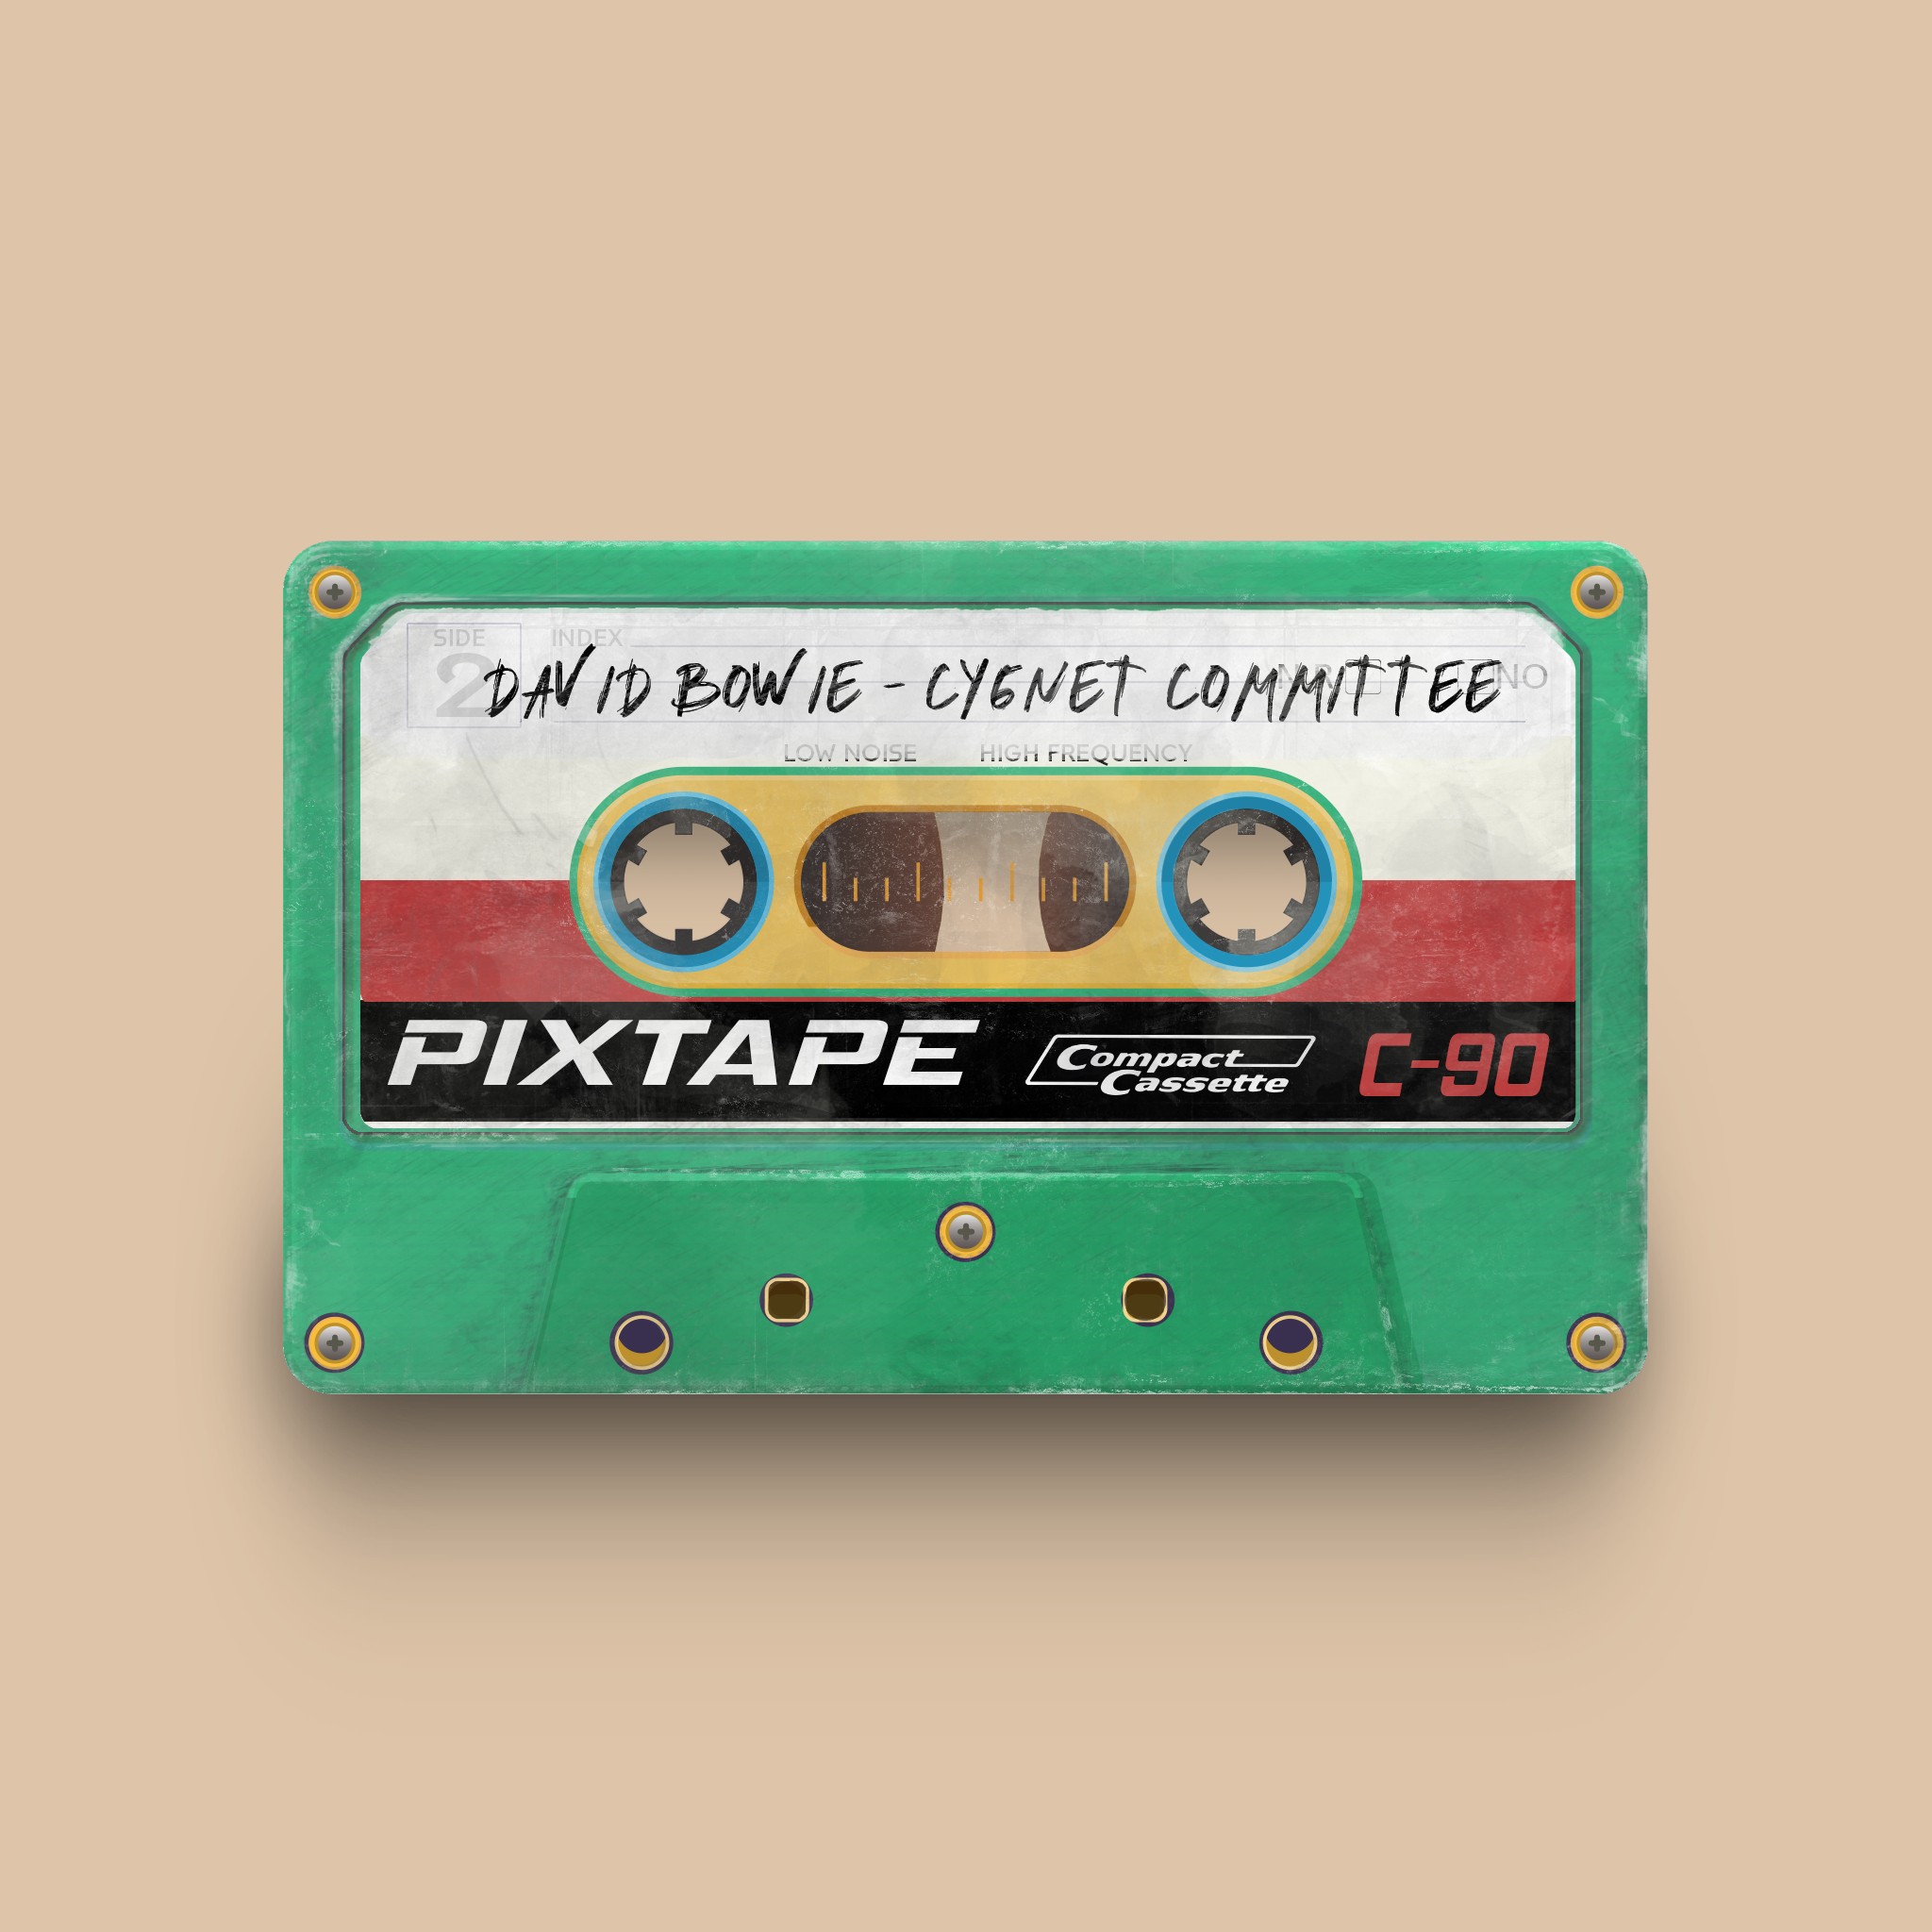 PixTape #6926 | David Bowie - Cygnet Committee